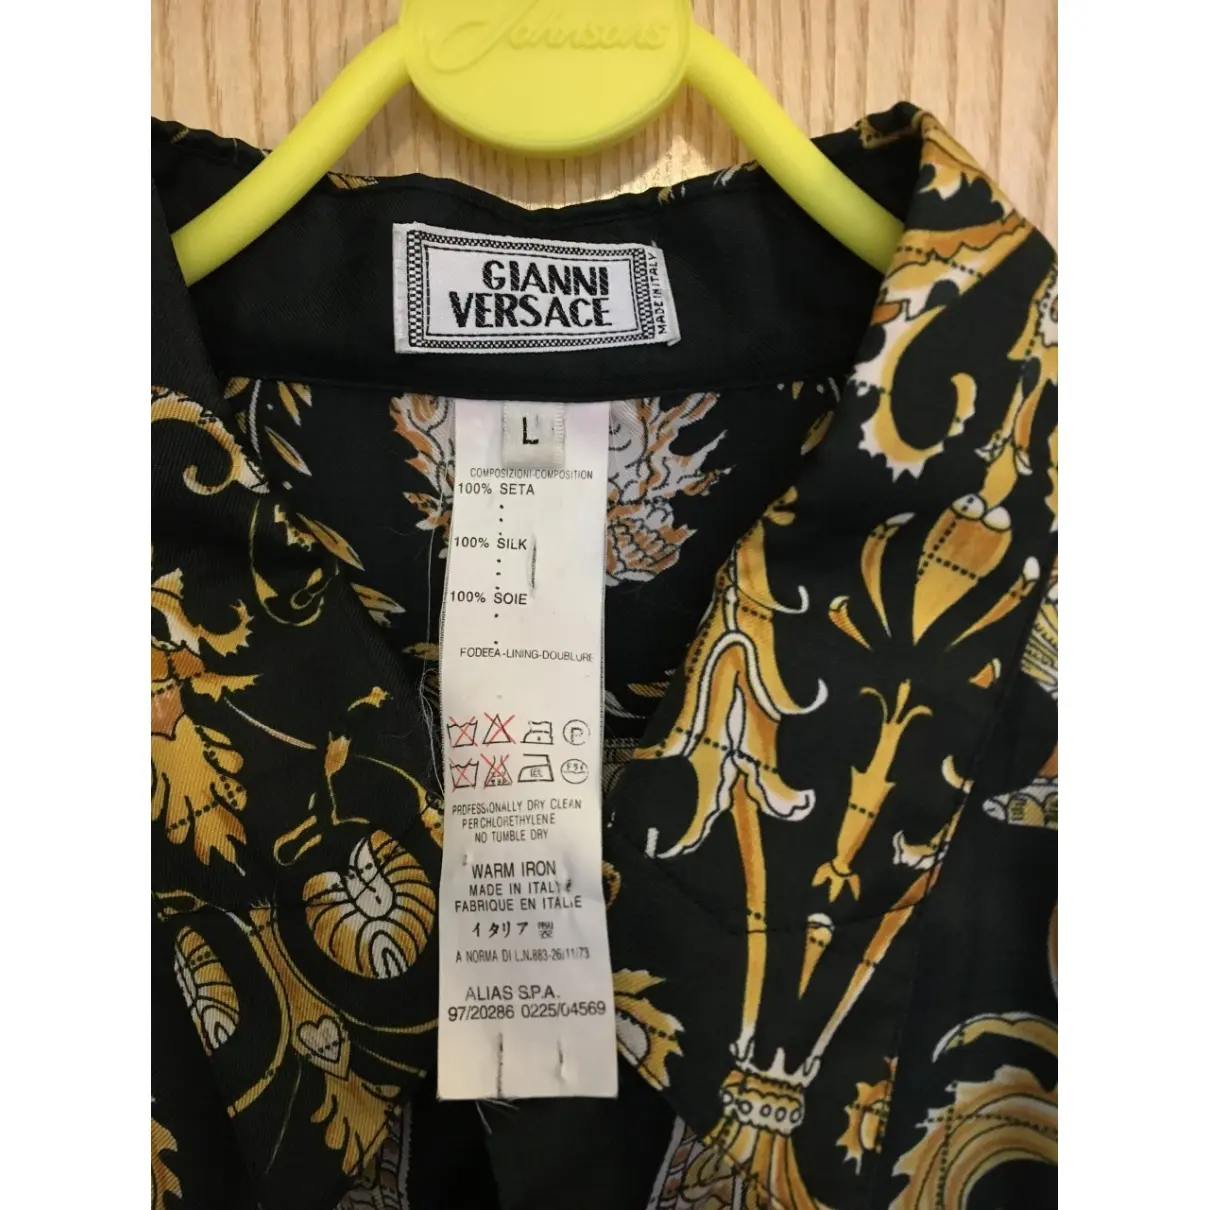 Buy Gianni Versace Silk shirt online - Vintage